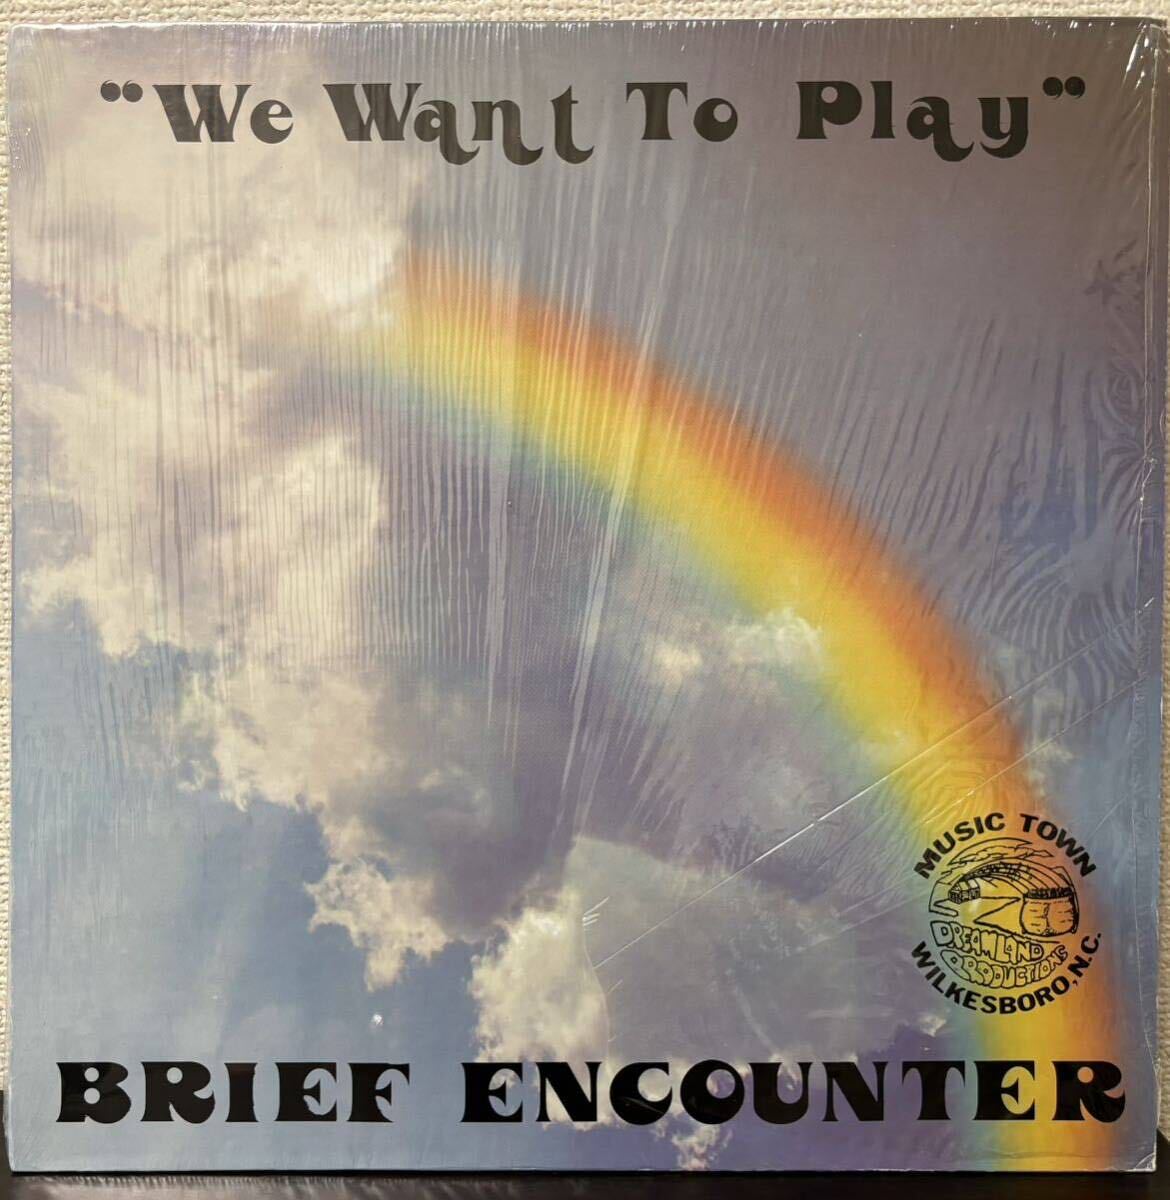 BRIEF ENCOUNTER/ We want to play rare glue vu popular mega rare record LP 1981 ultimate beautiful record shrink attaching 